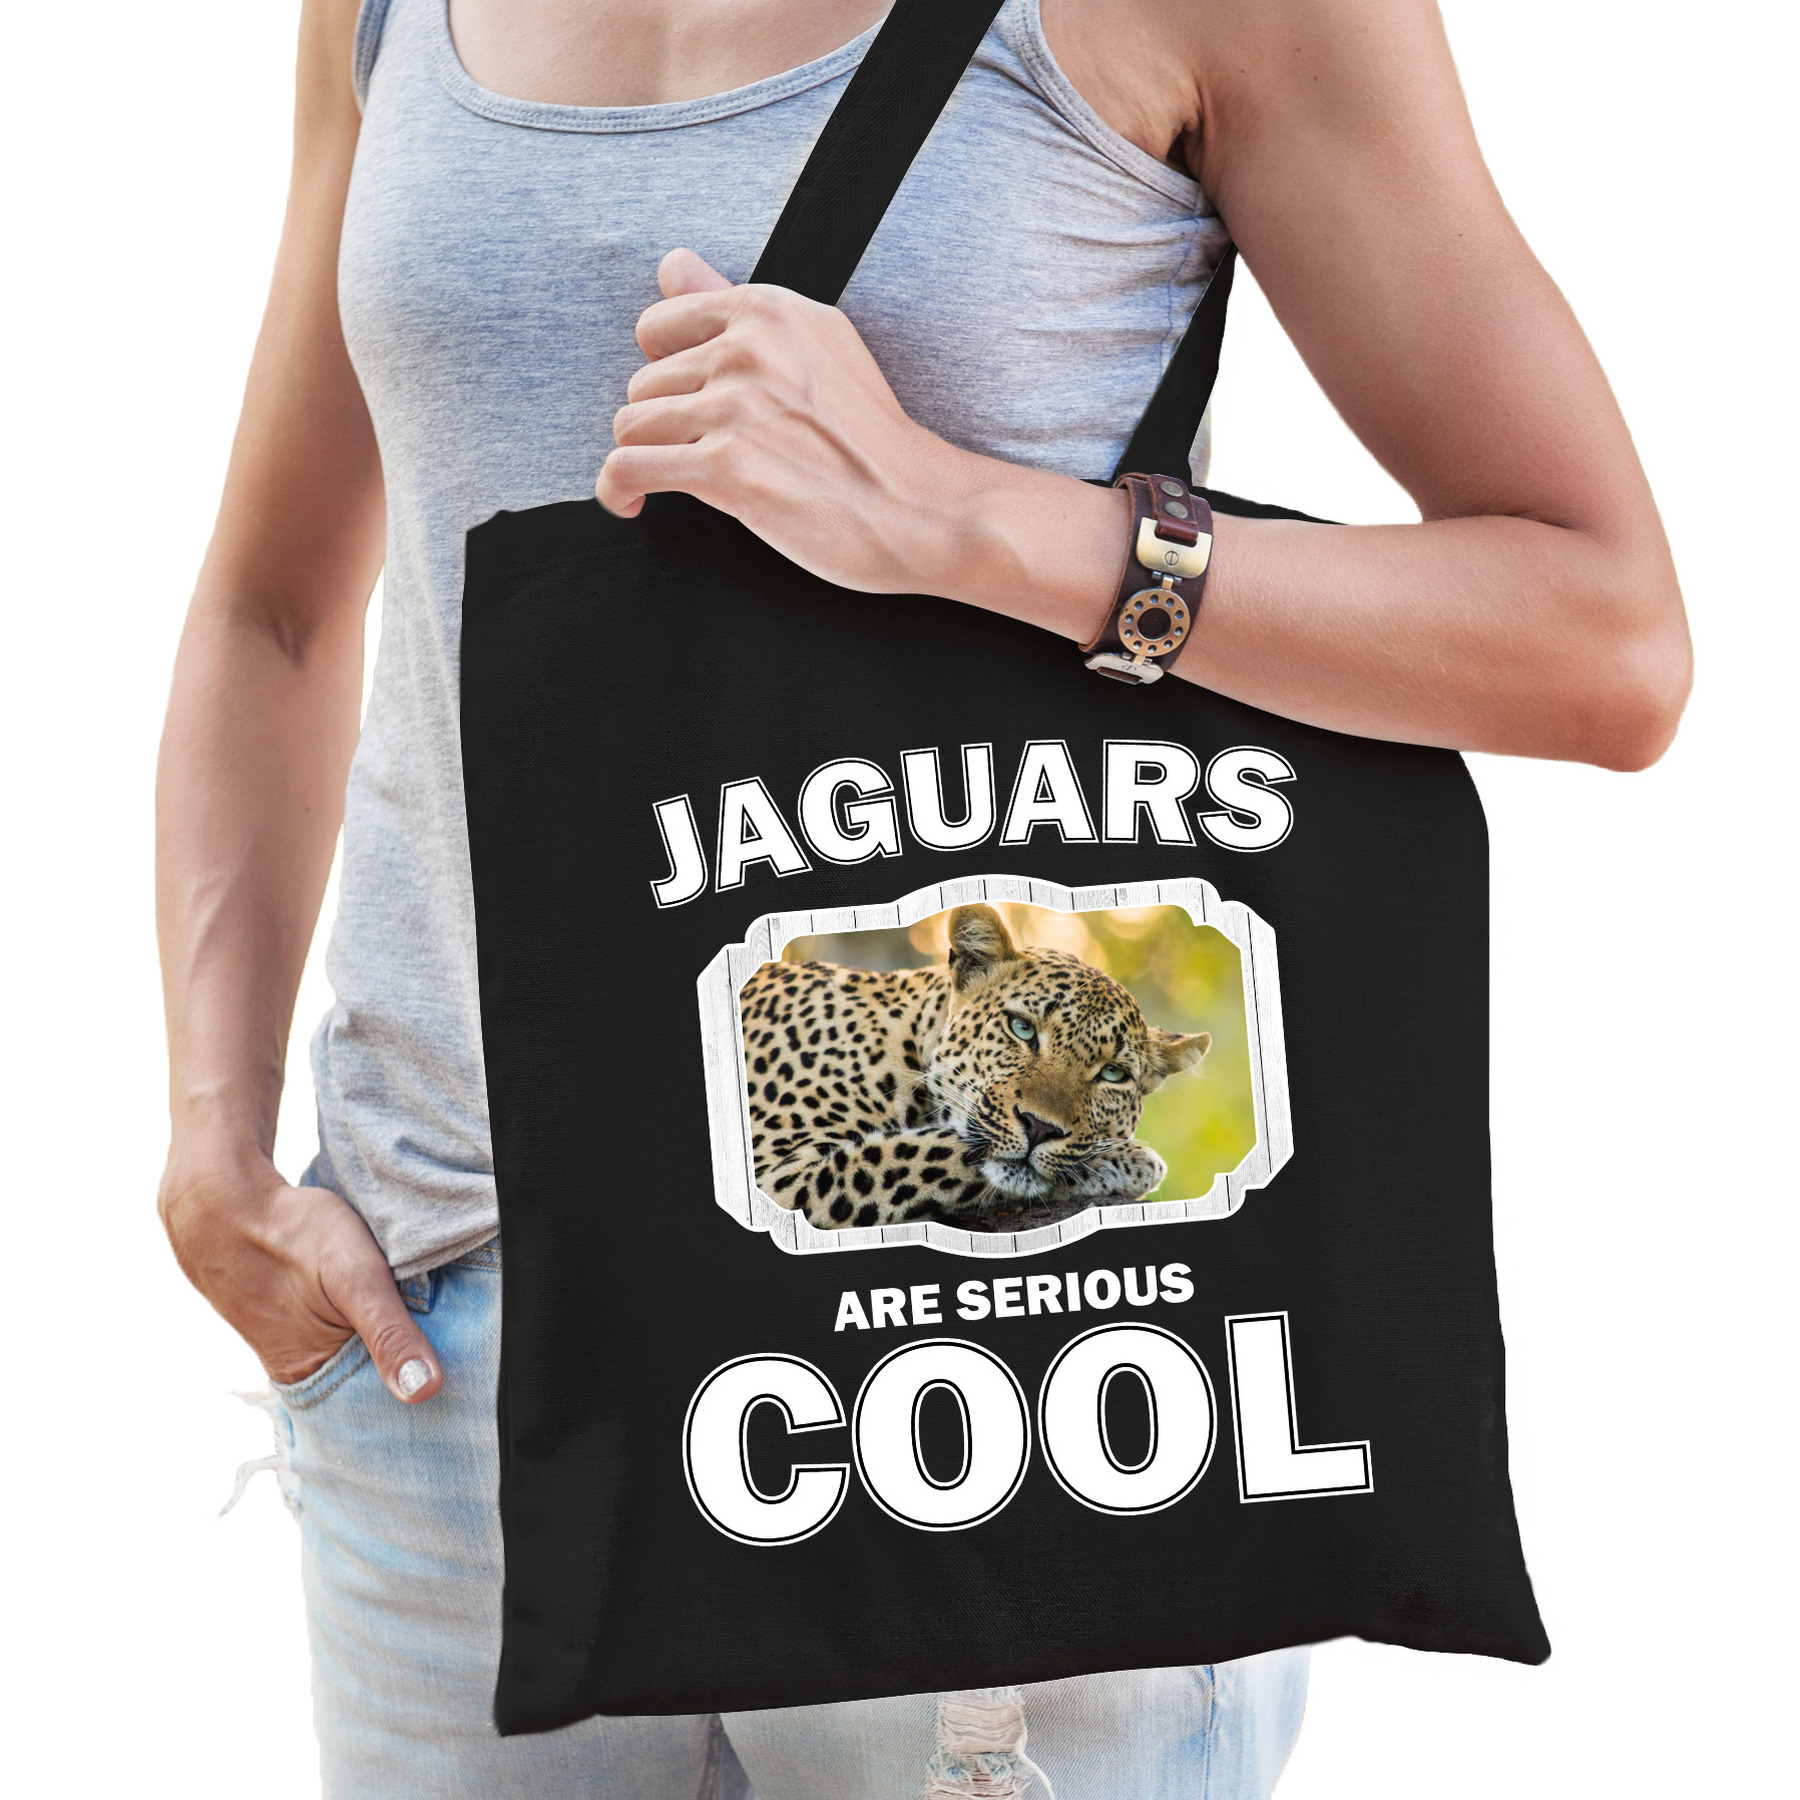 Katoenen tasje jaguars are serious cool zwart - jaguars/ luipaarden/ luipaard cadeau tas